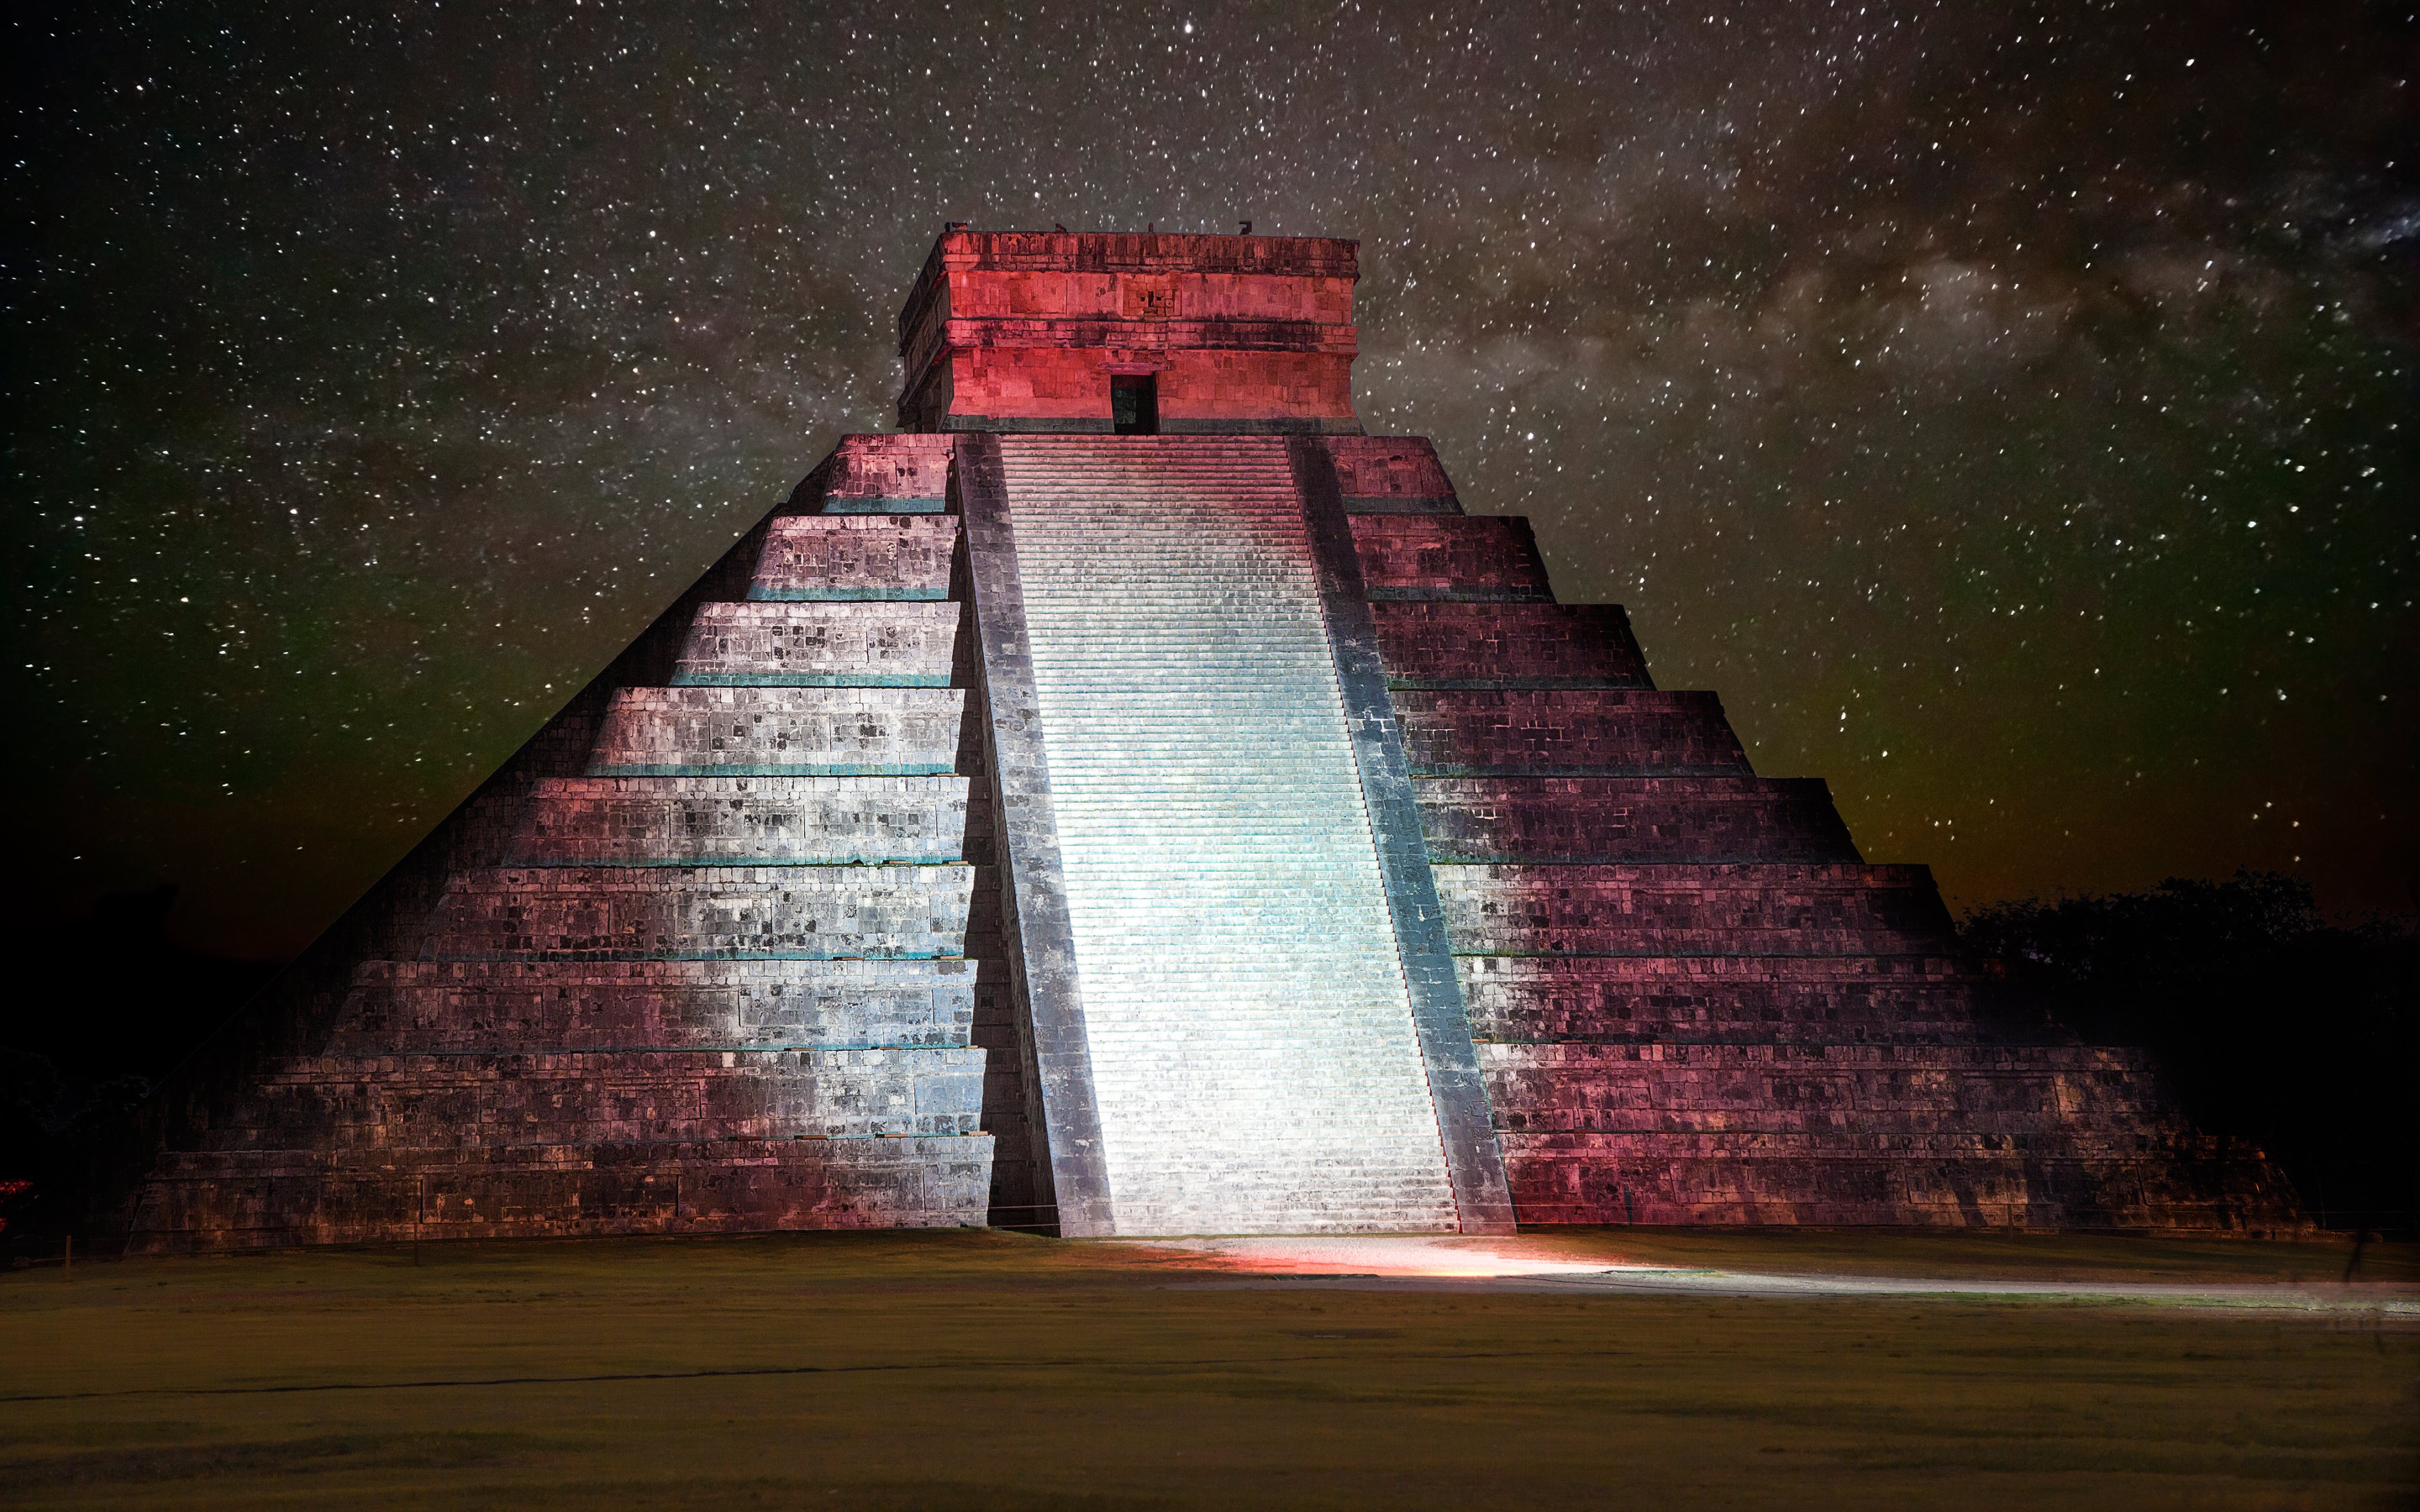 man made, chichen itza, light, mexico, night, pyramid, starry sky